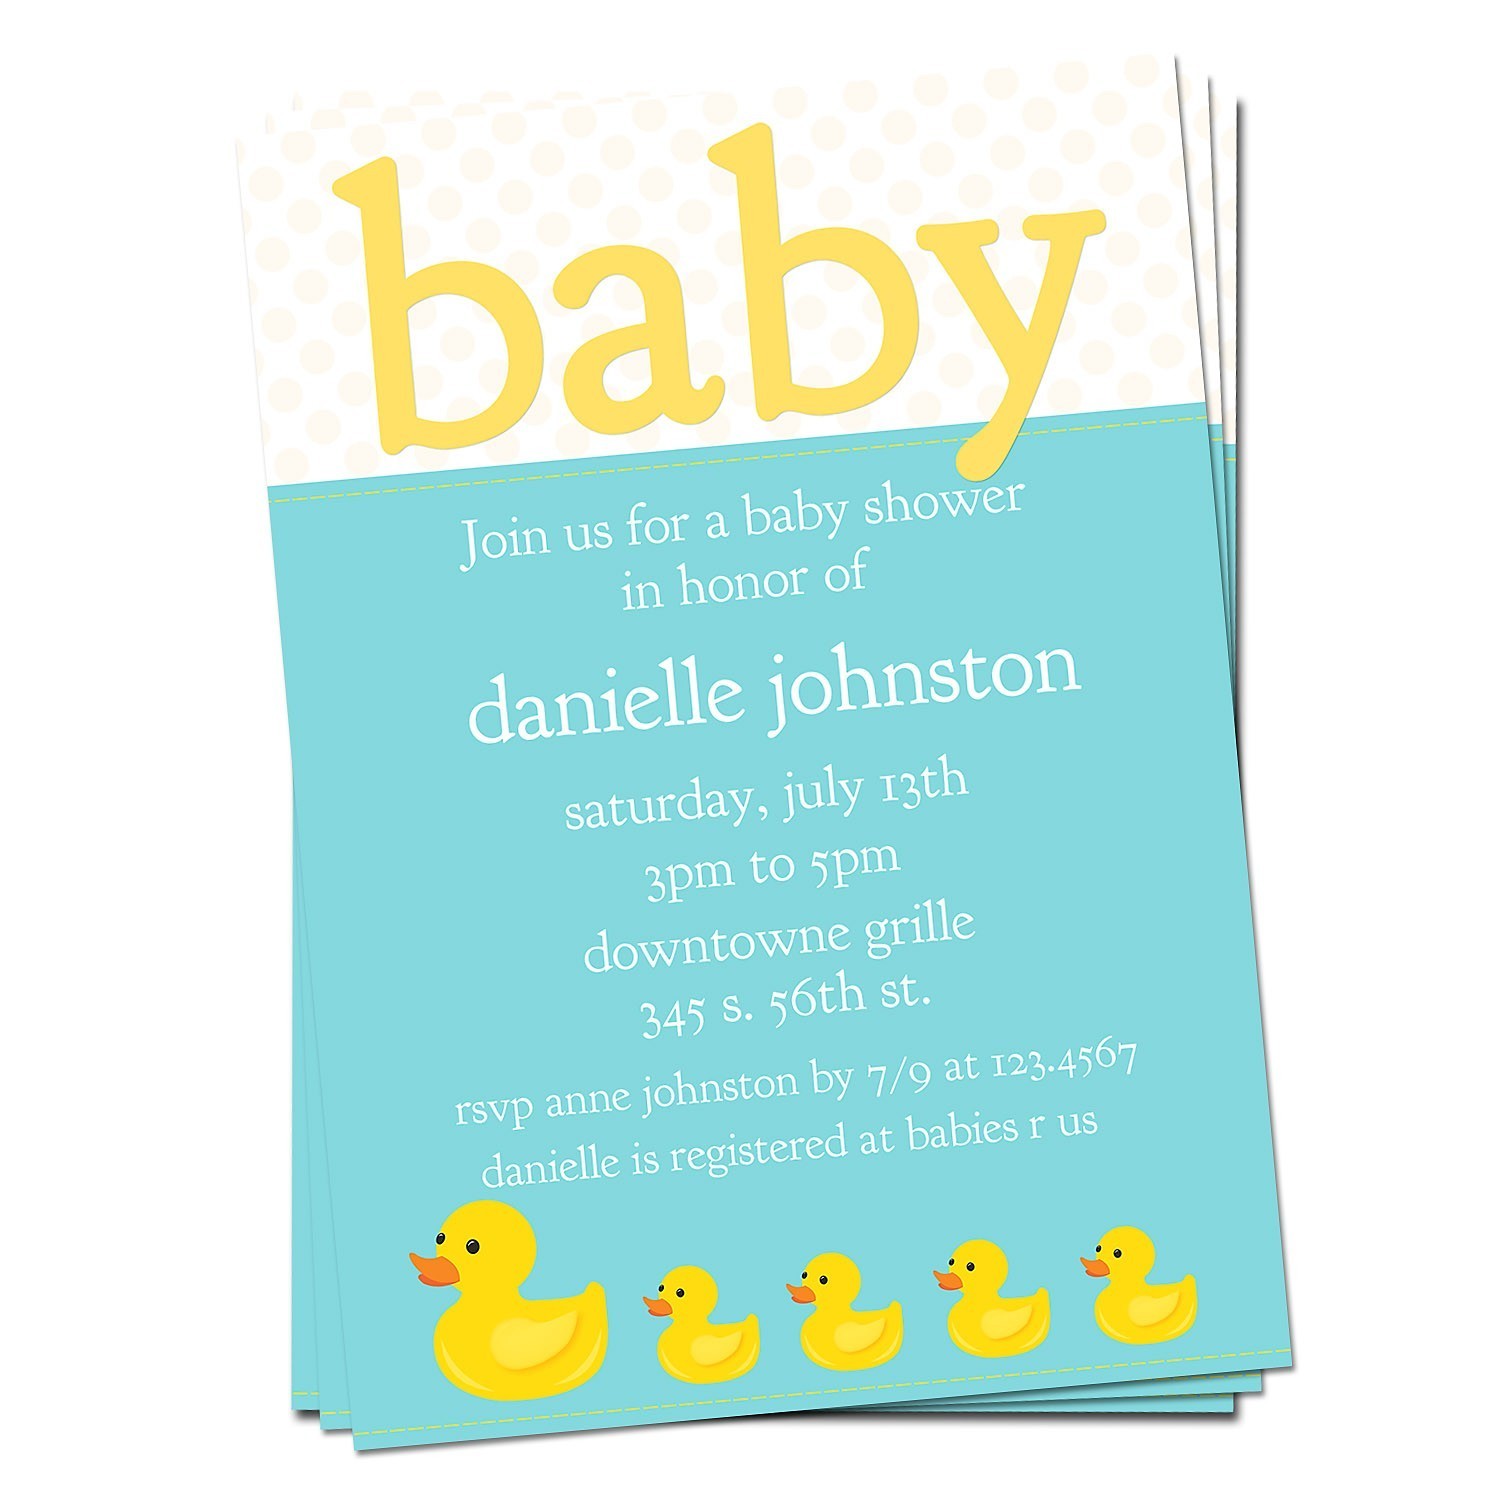 Rubber Ducky Baby Shower Invitations Dolanpedia